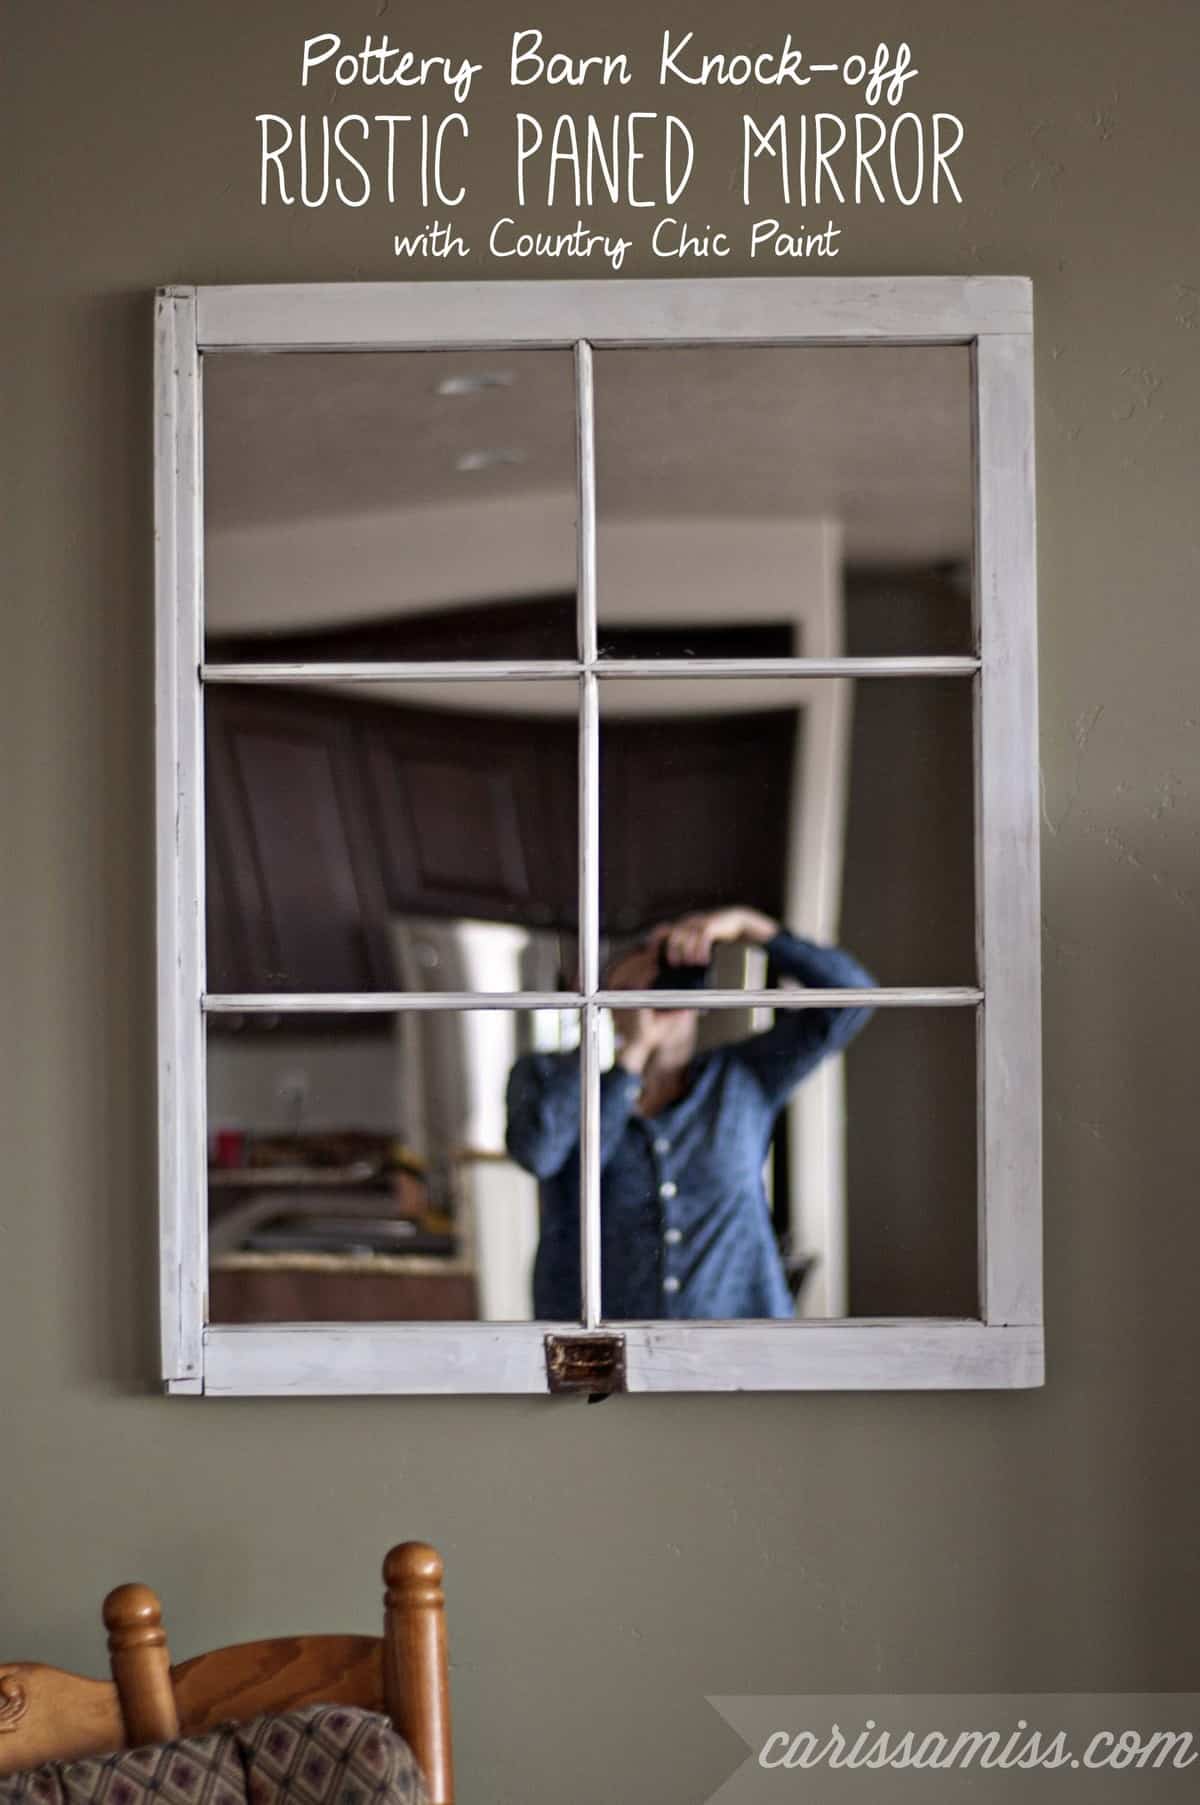 Potterybarn inspired mirror #DIY #potterybarn #vintage - www.countrychicpaint.com/blog